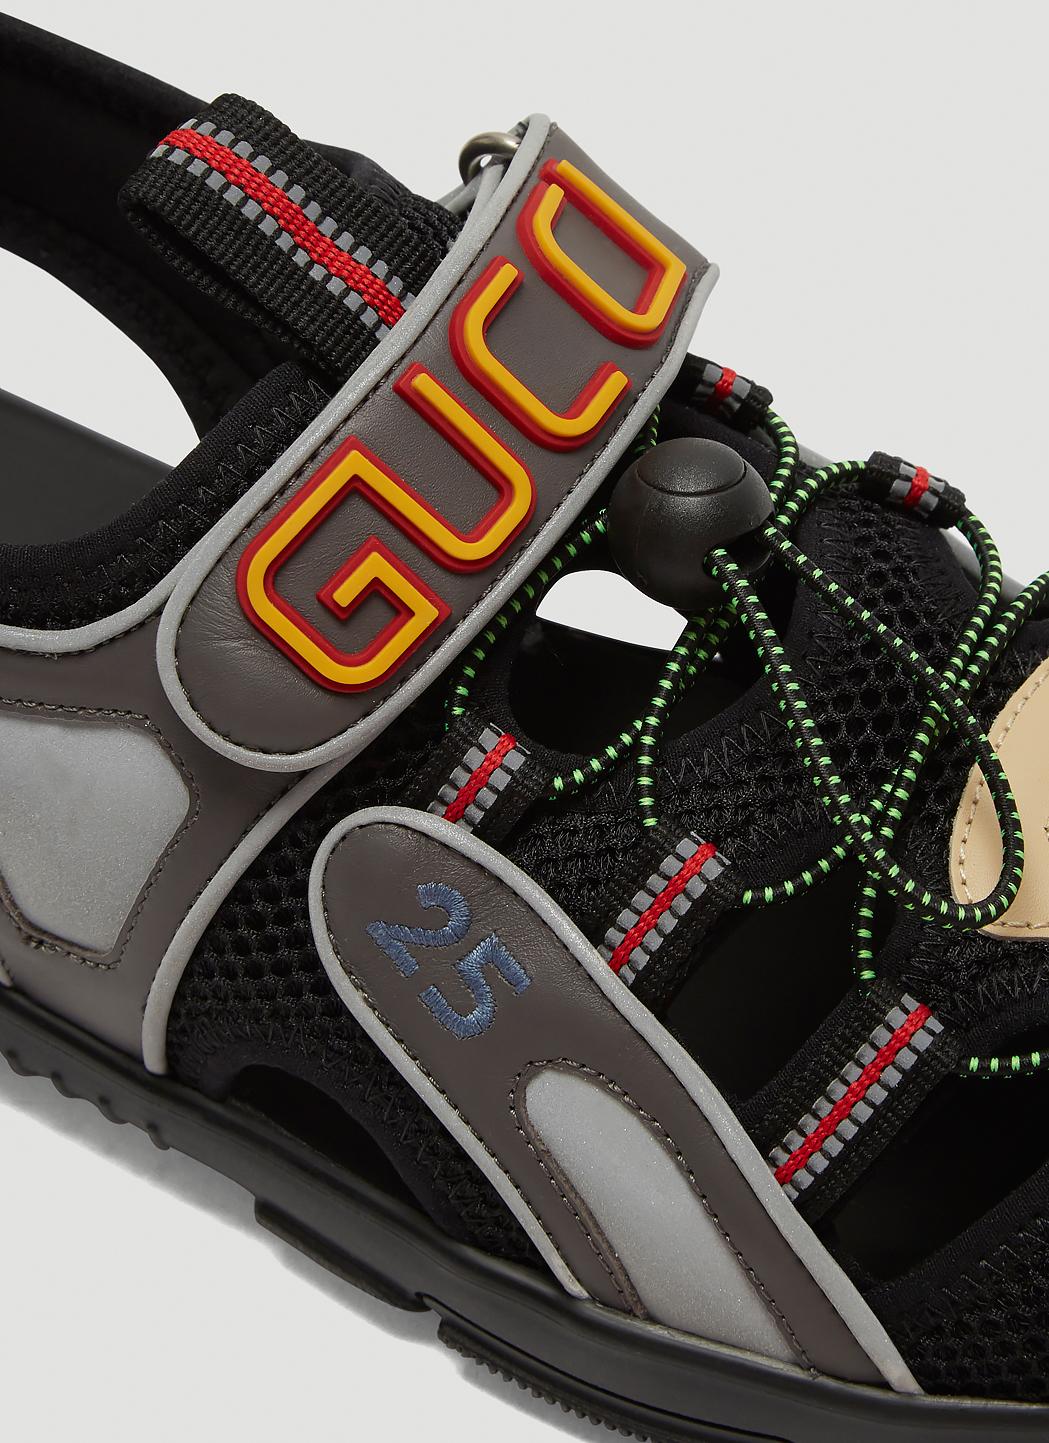 Gucci Mens Tinsel Sports Sandals, 7.5 / Black Gold